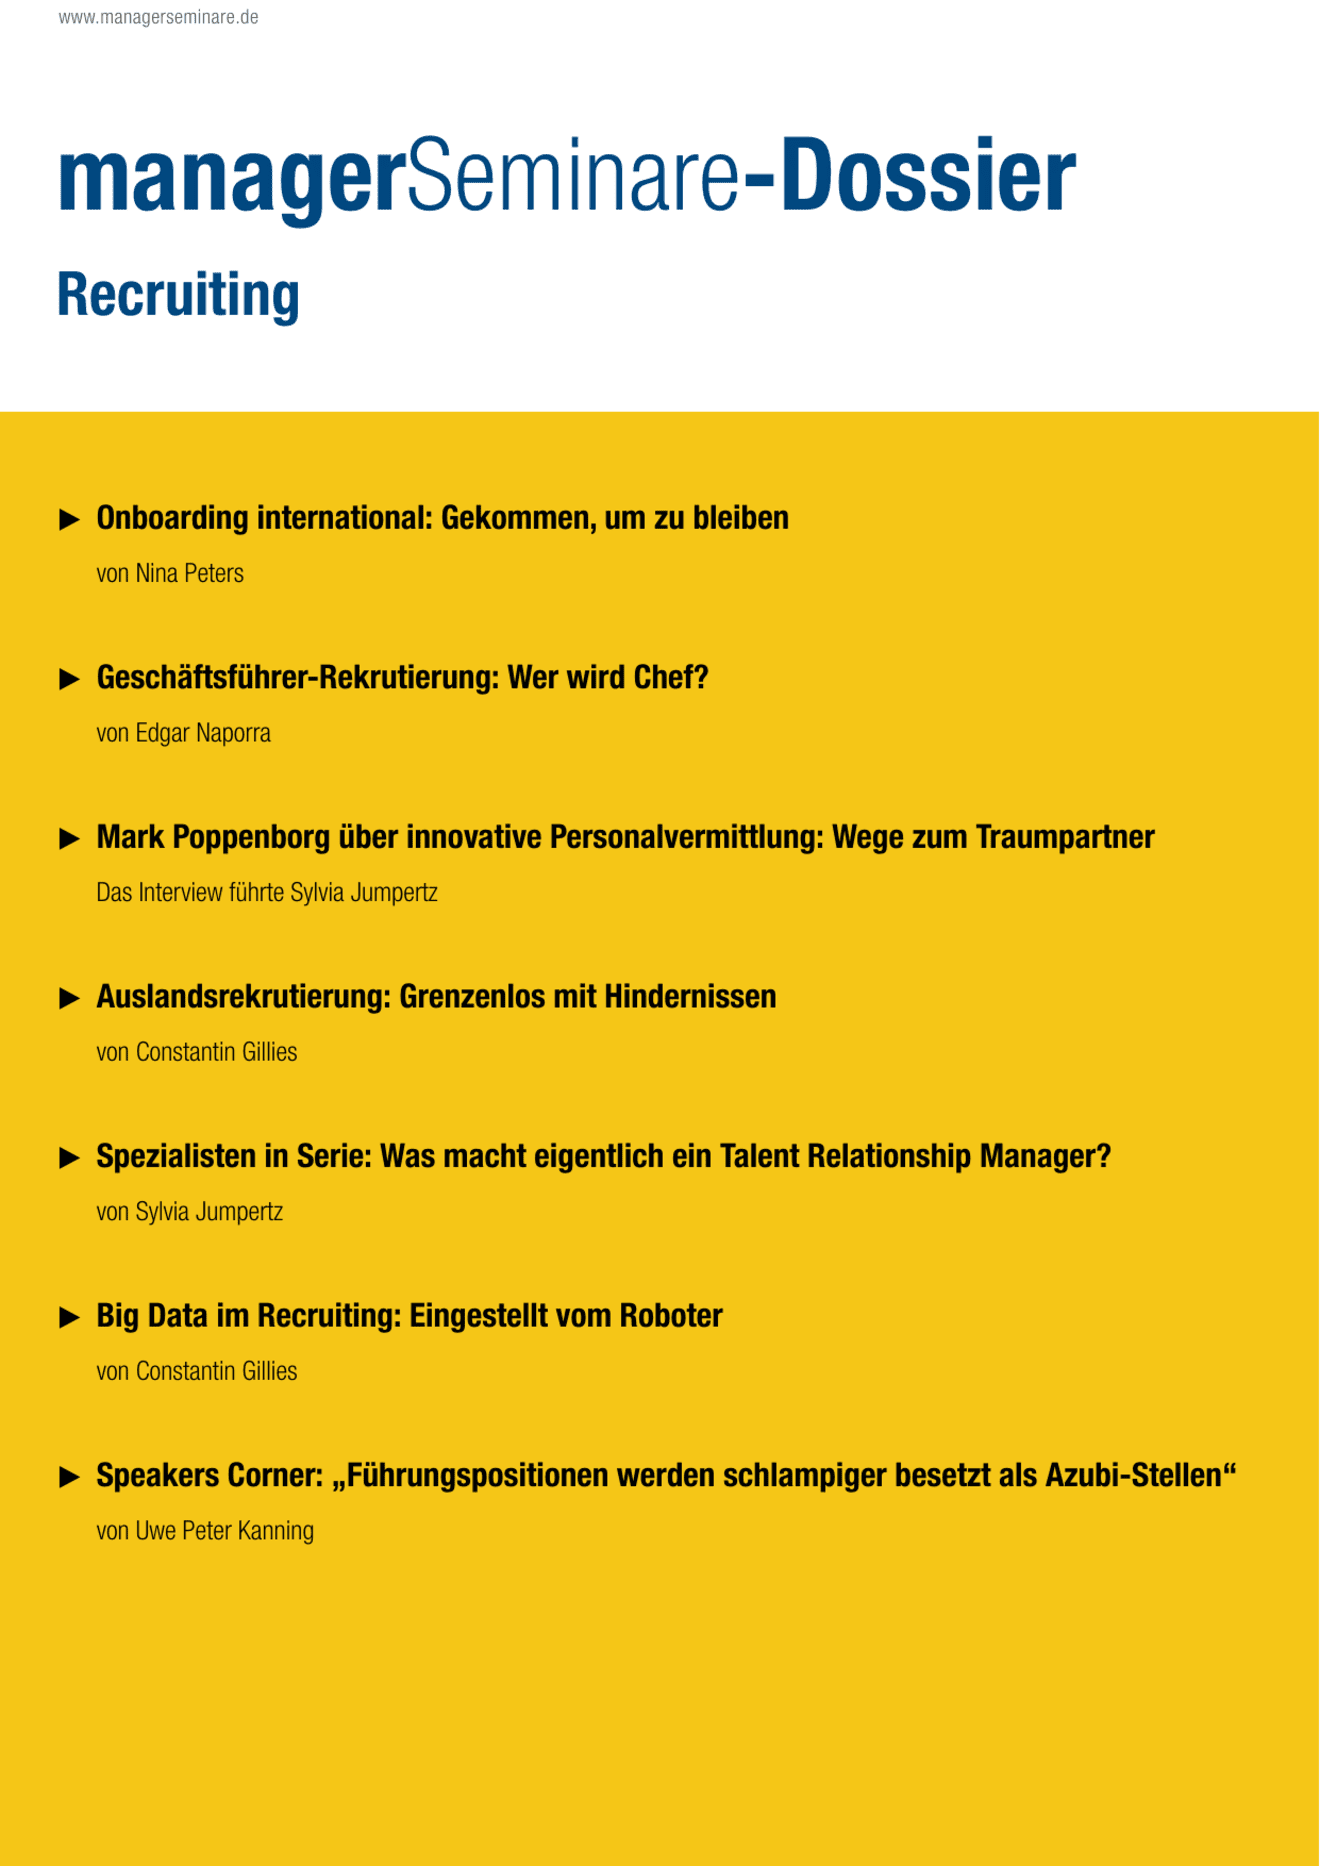 zum Dossier: Recruiting